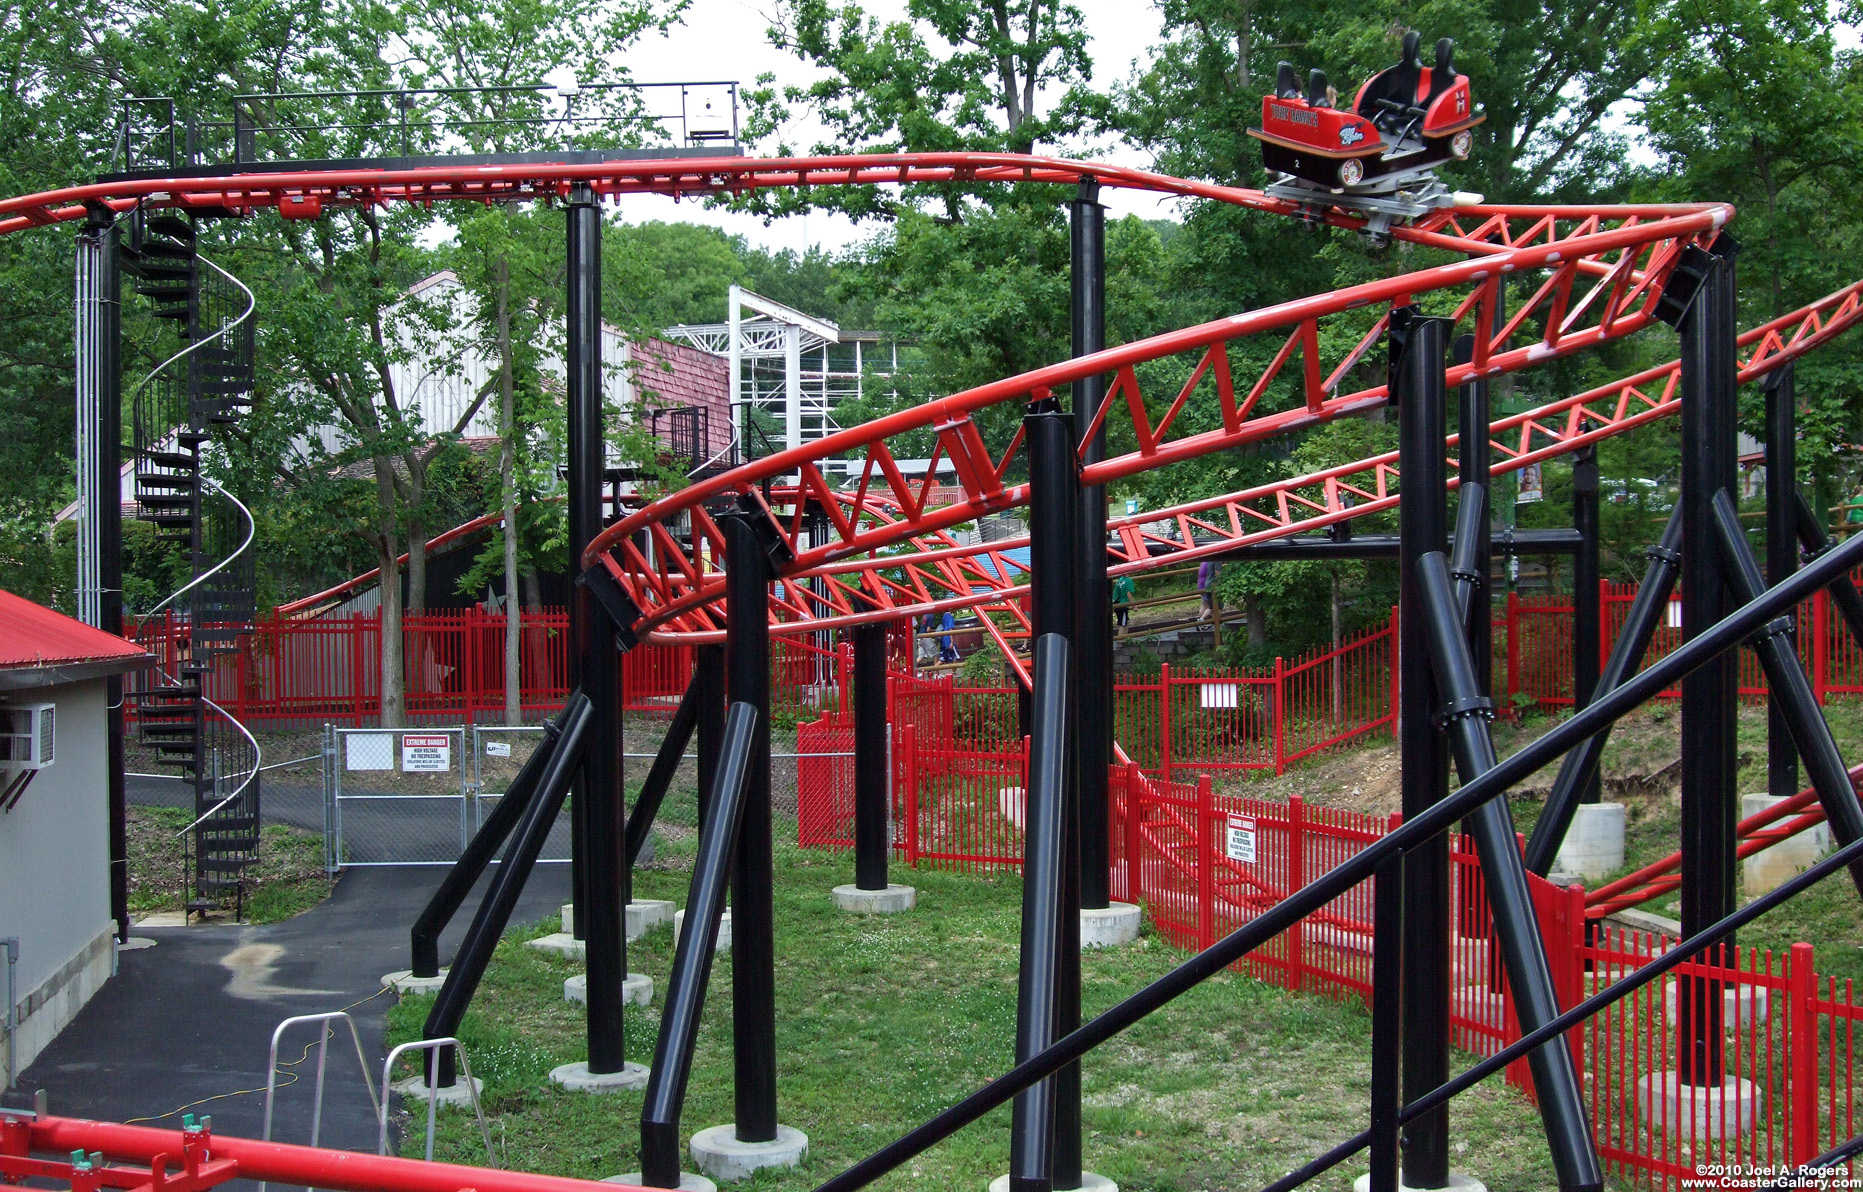 Tony Hawk's Big Spin roller coaster